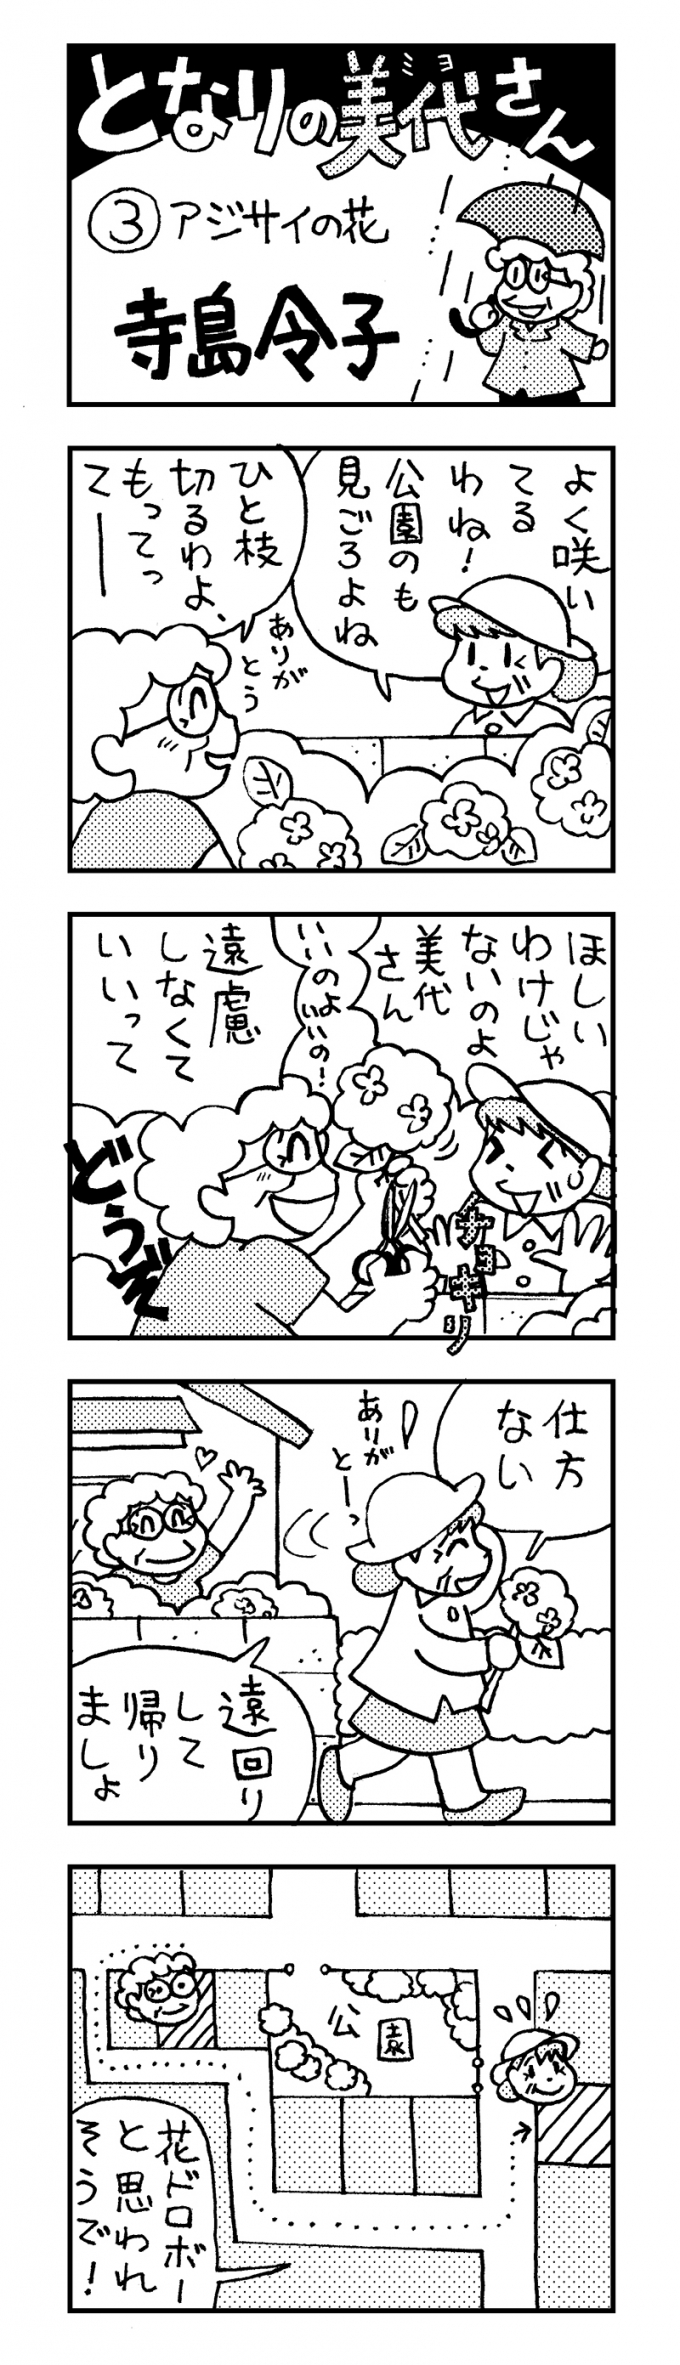 日本薬師堂会報誌掲載4コマ漫画 第3弾の画像1枚目